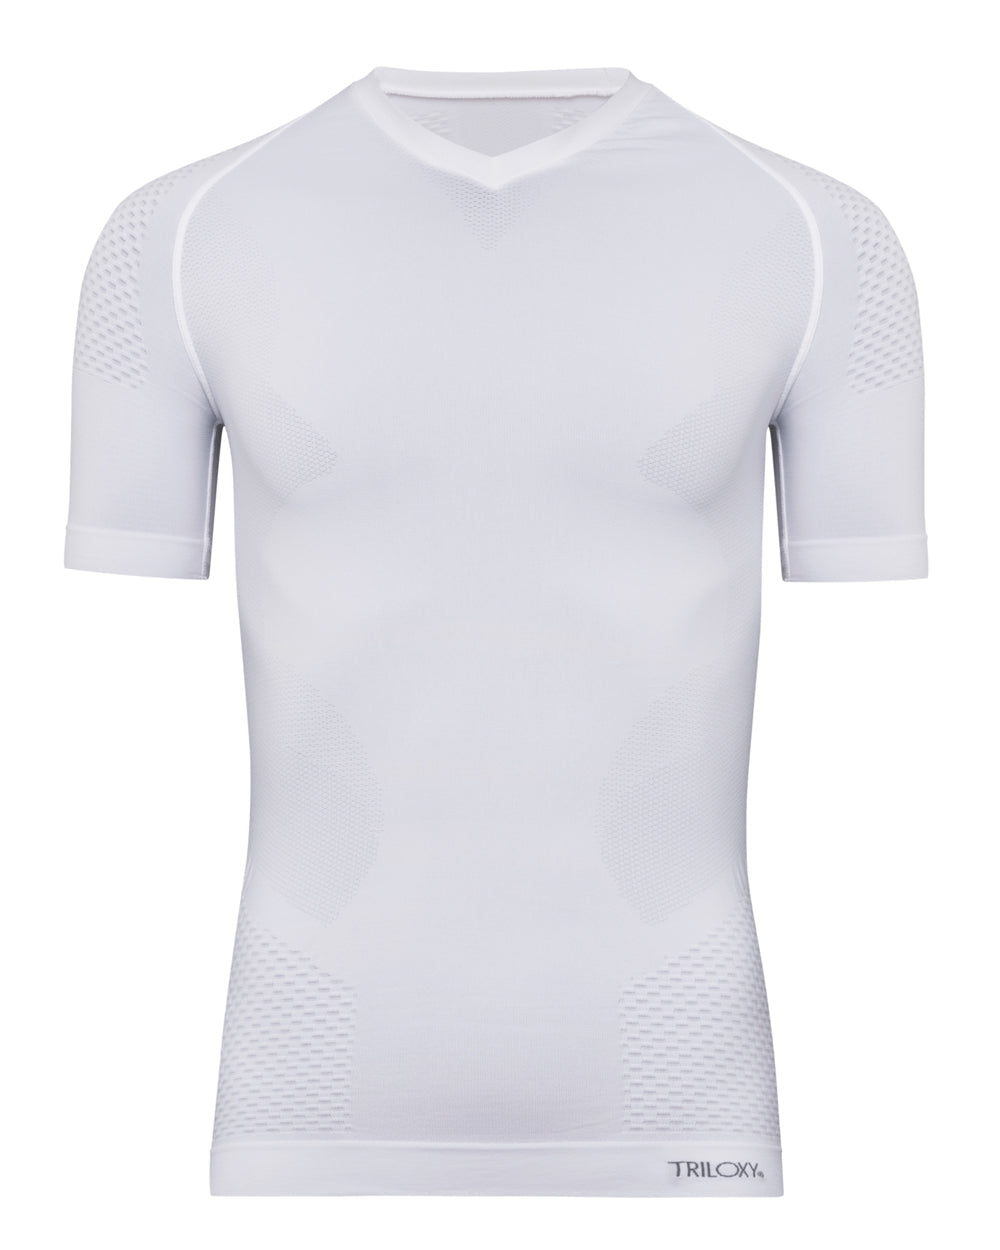 T-shirt FIR man short sleeves - White - Medical Device triloxy